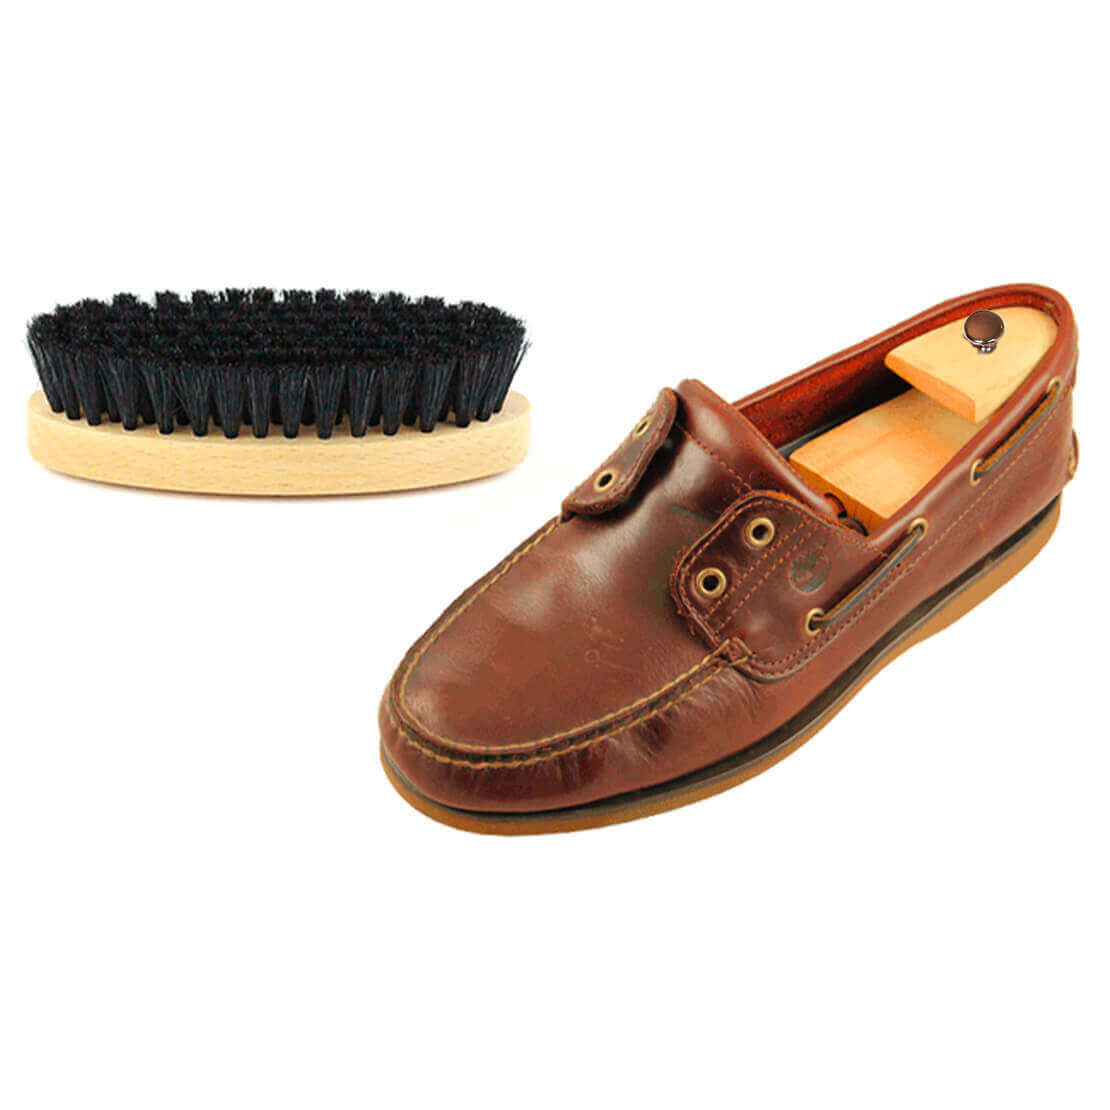 Shoe Polish for Tan Shoes: Choosing the Right Shoe Polish Colour